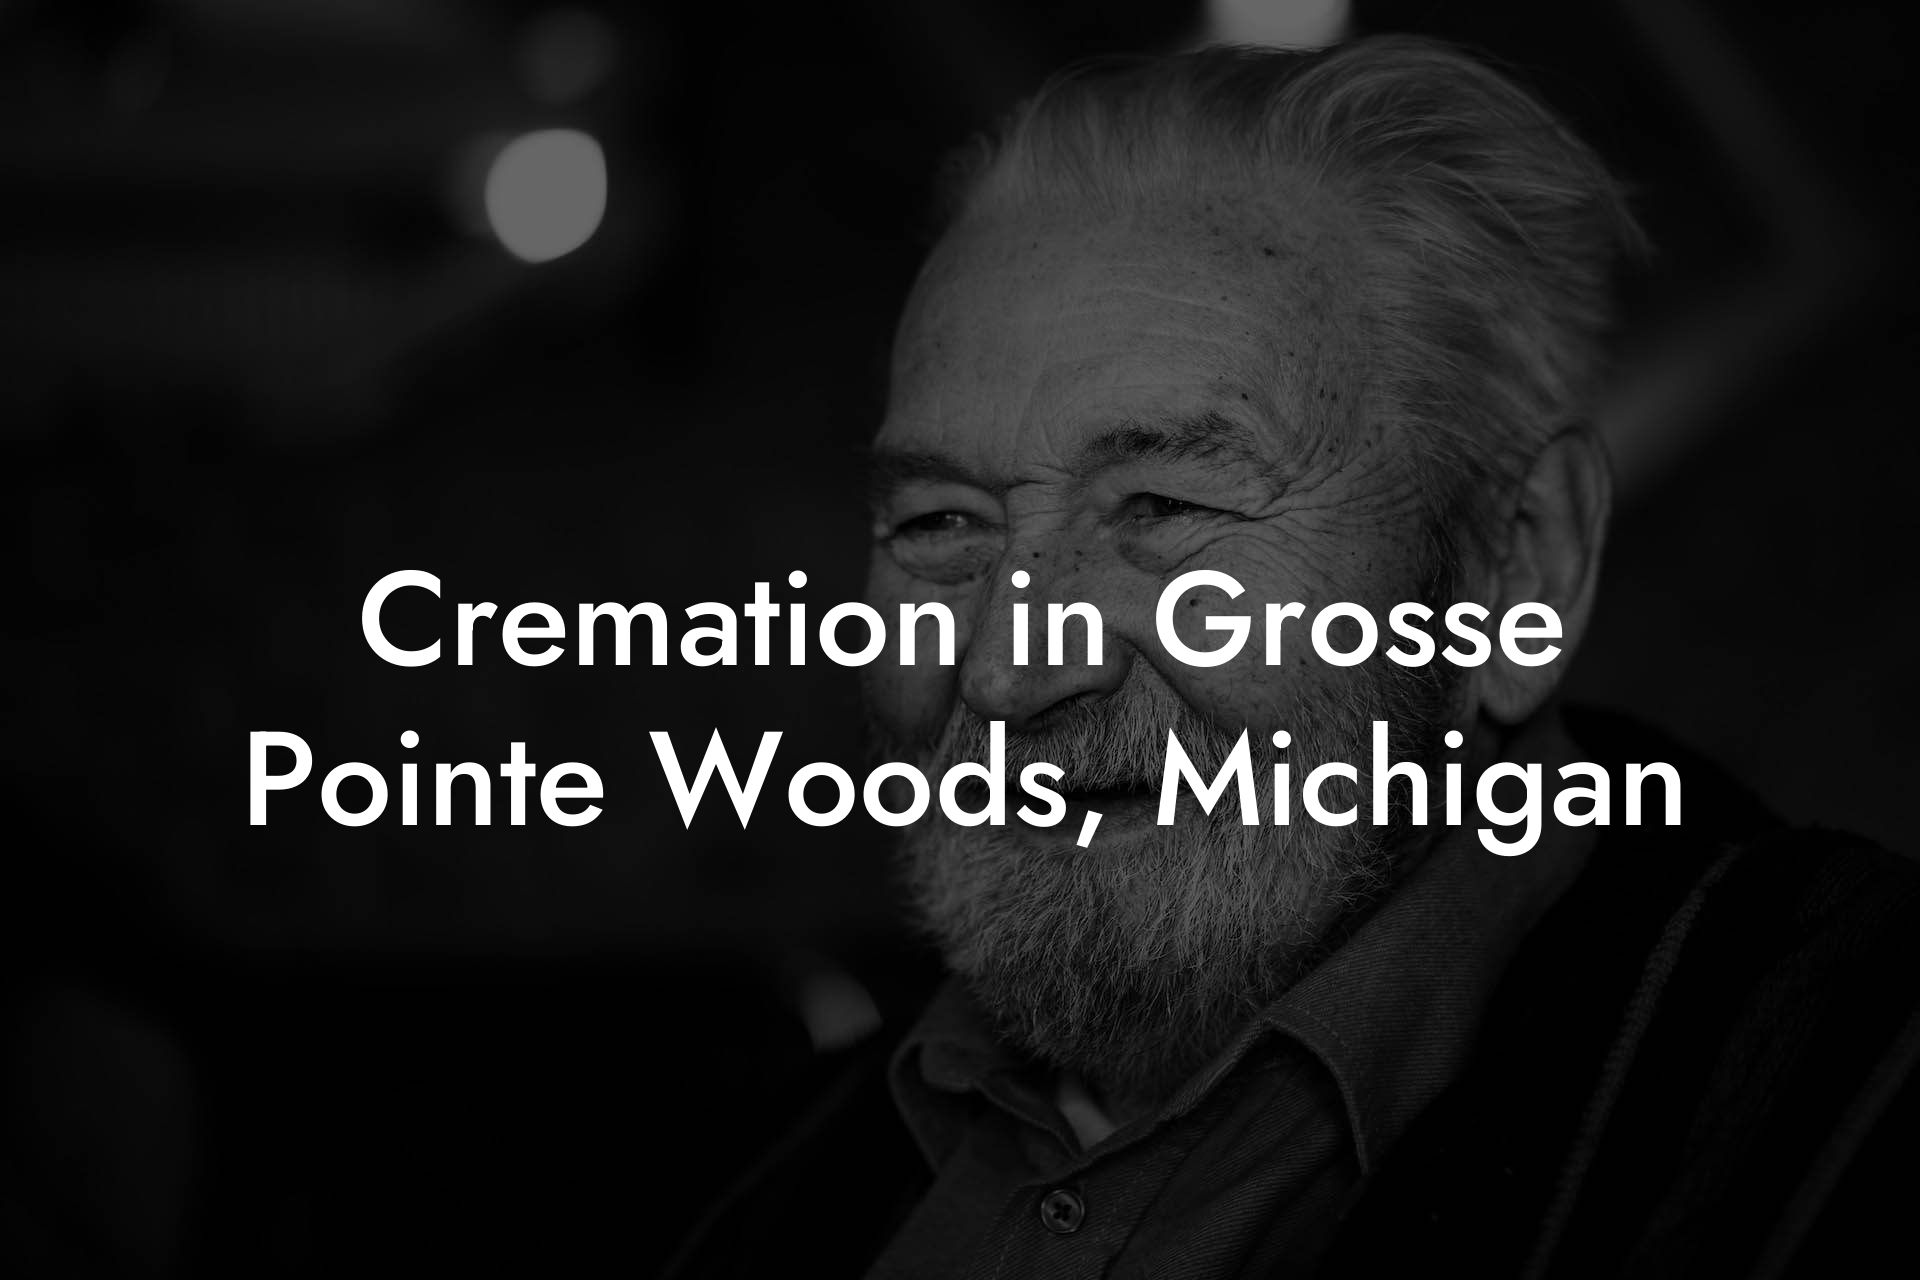 Cremation in Grosse Pointe Woods, Michigan